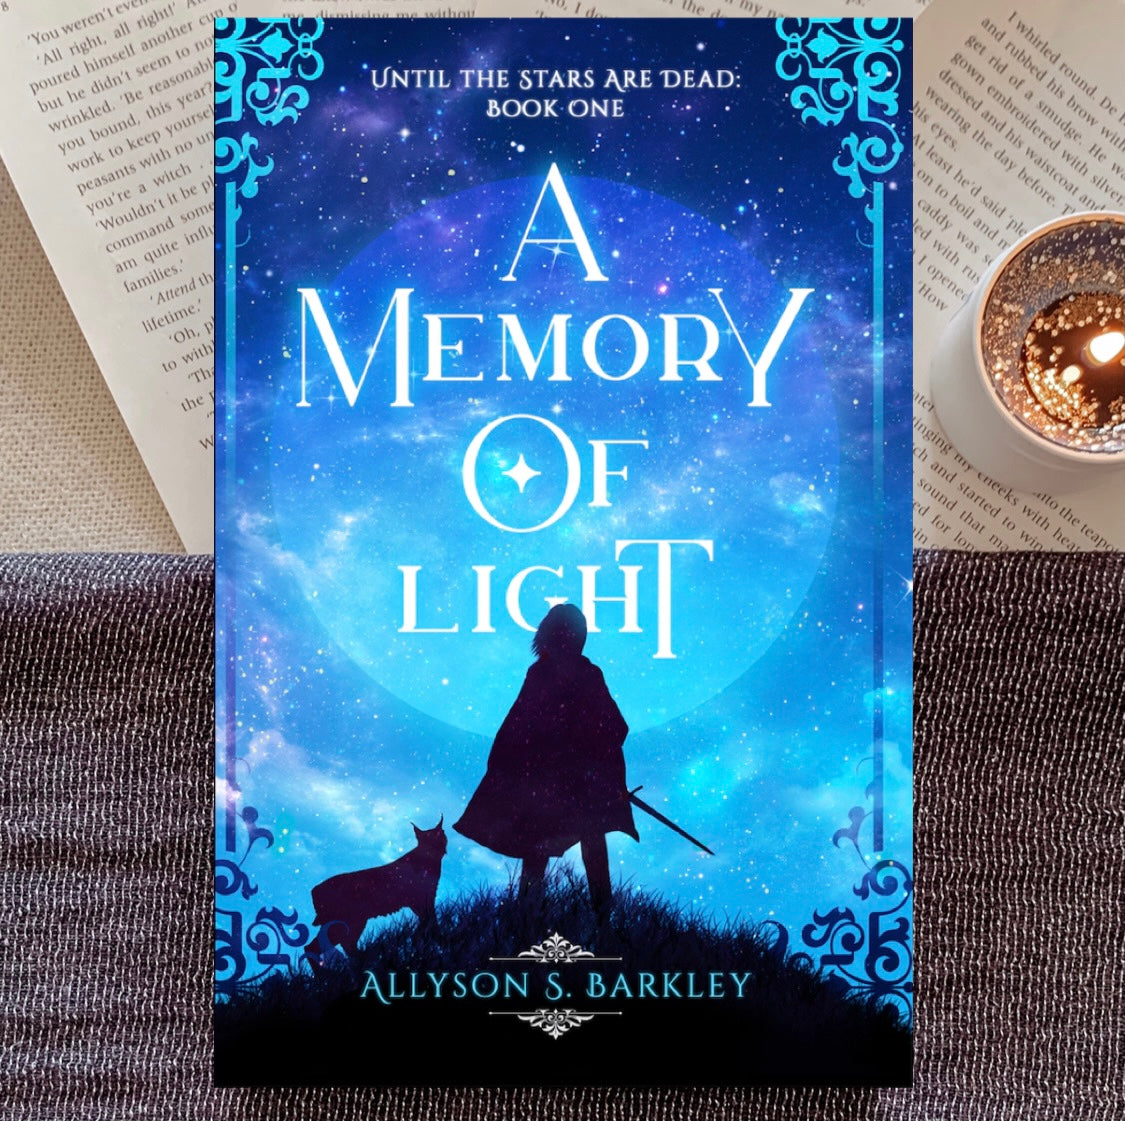 A Memory of Light by Allyson S. Barkley